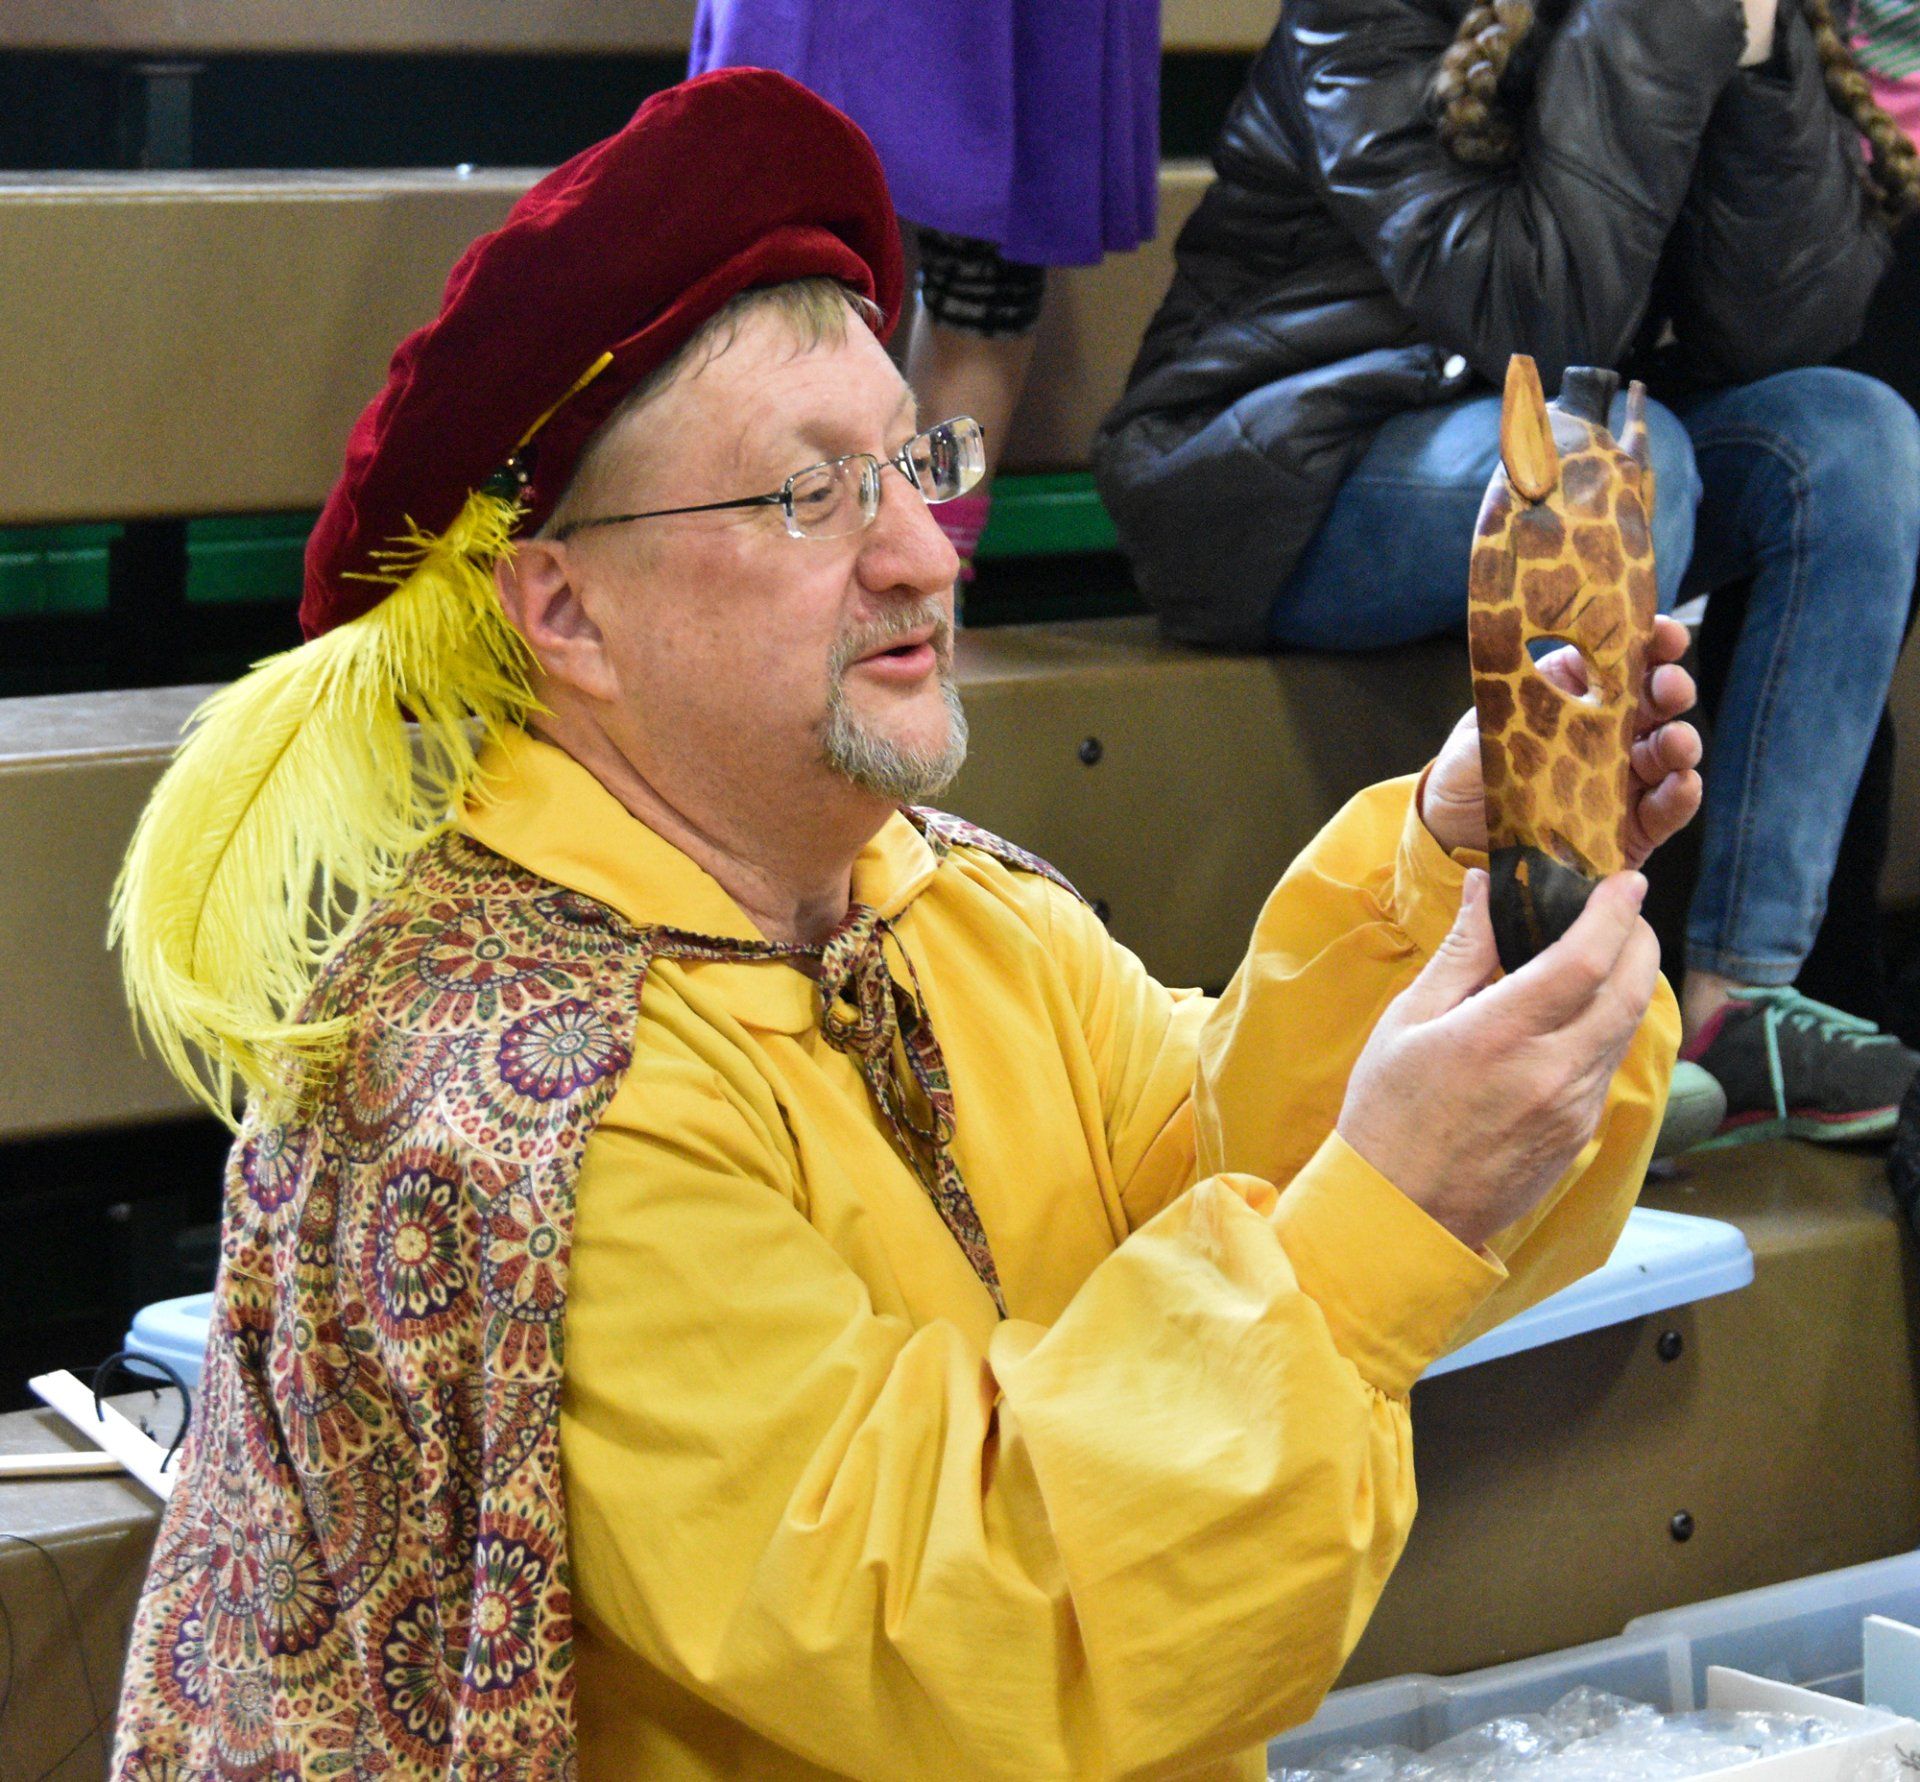 Mr. Dave holds up a giraffe mask for workshop participants